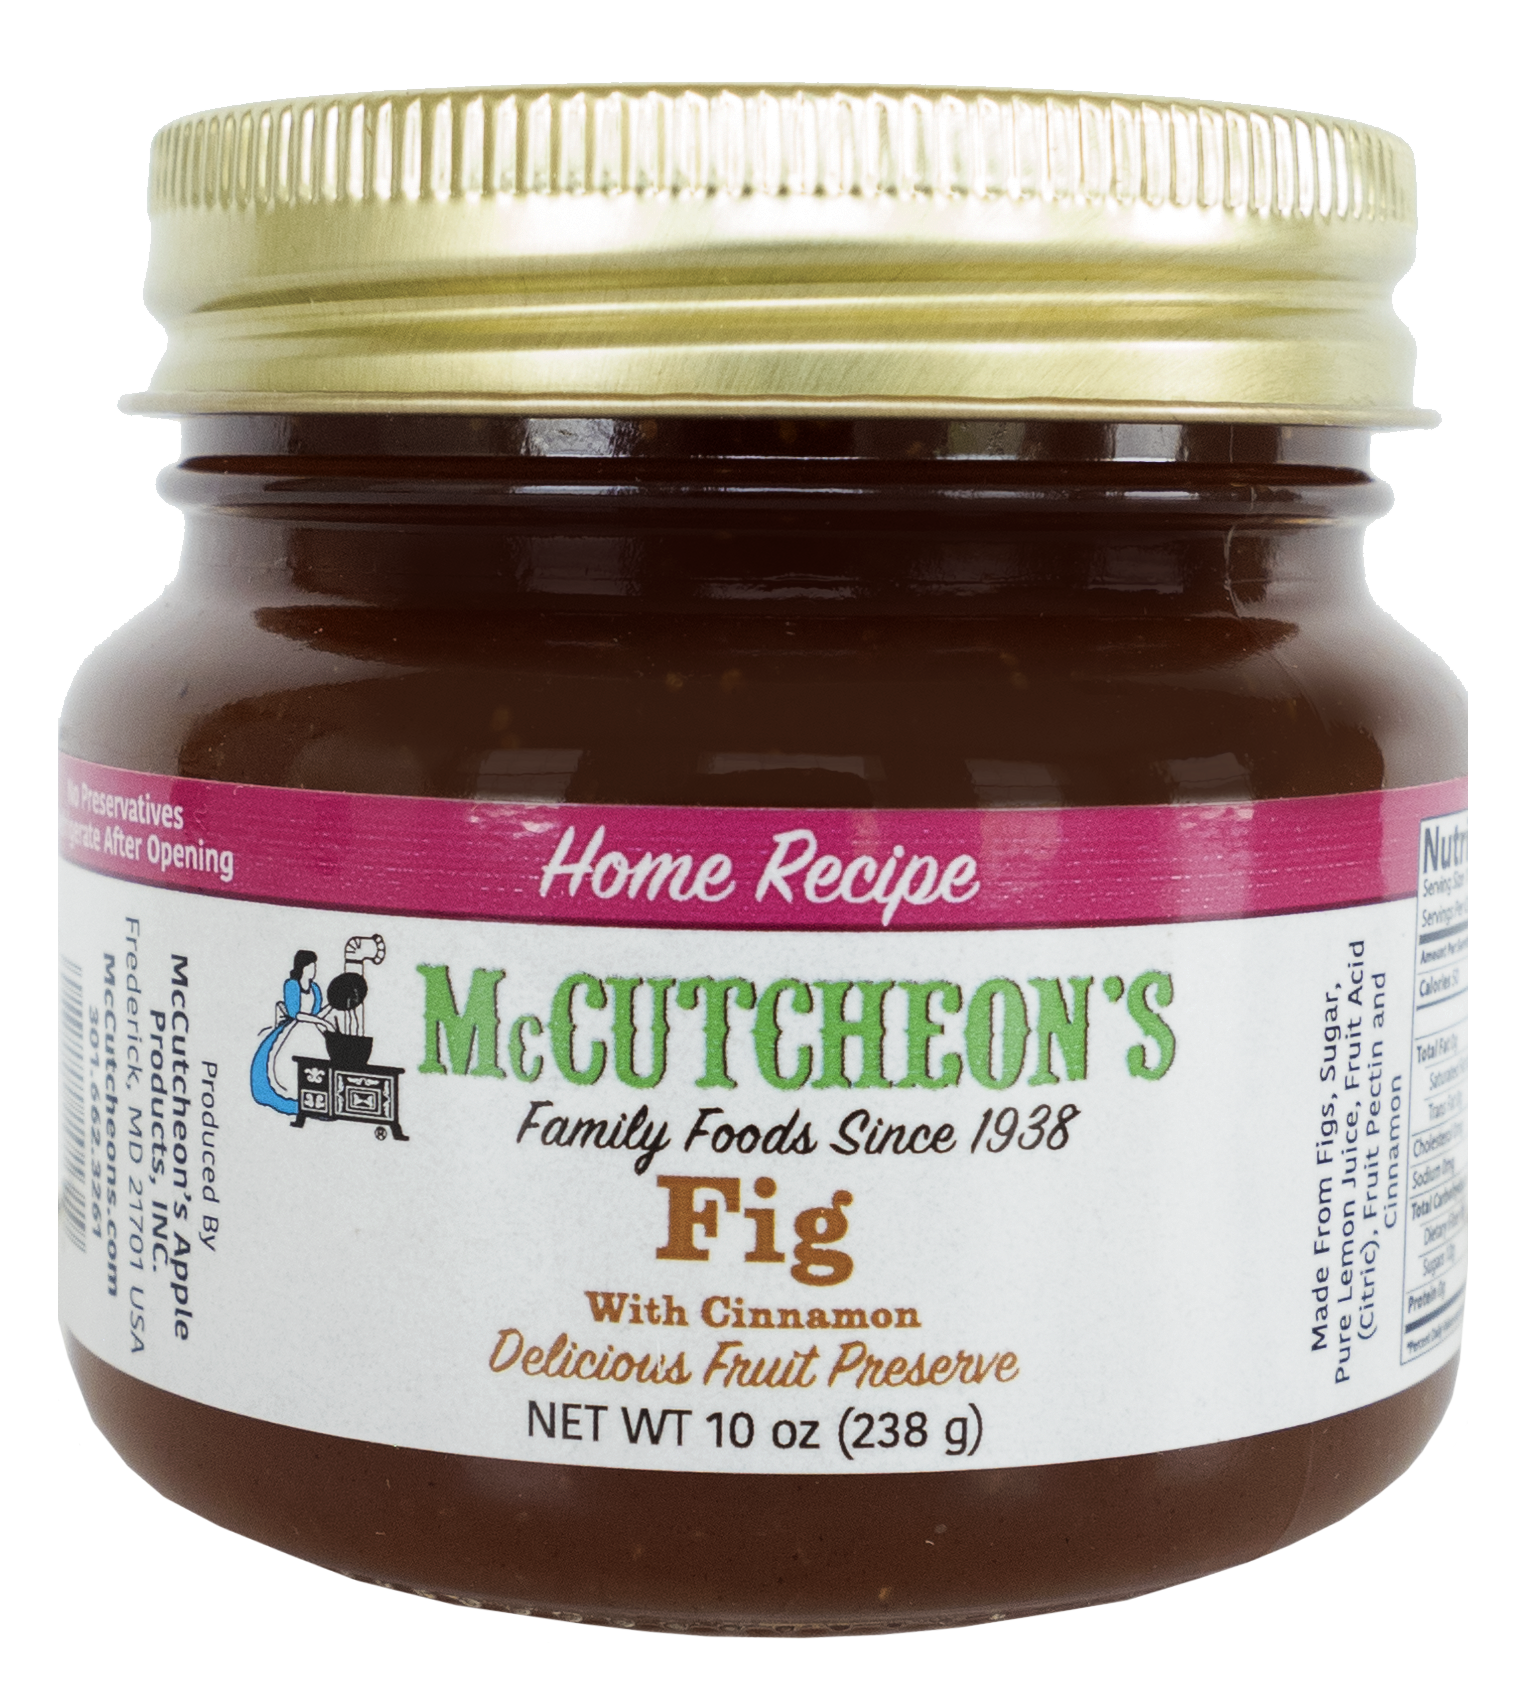 jar of McCutcheon's mini Fig Preserves with cinnamon